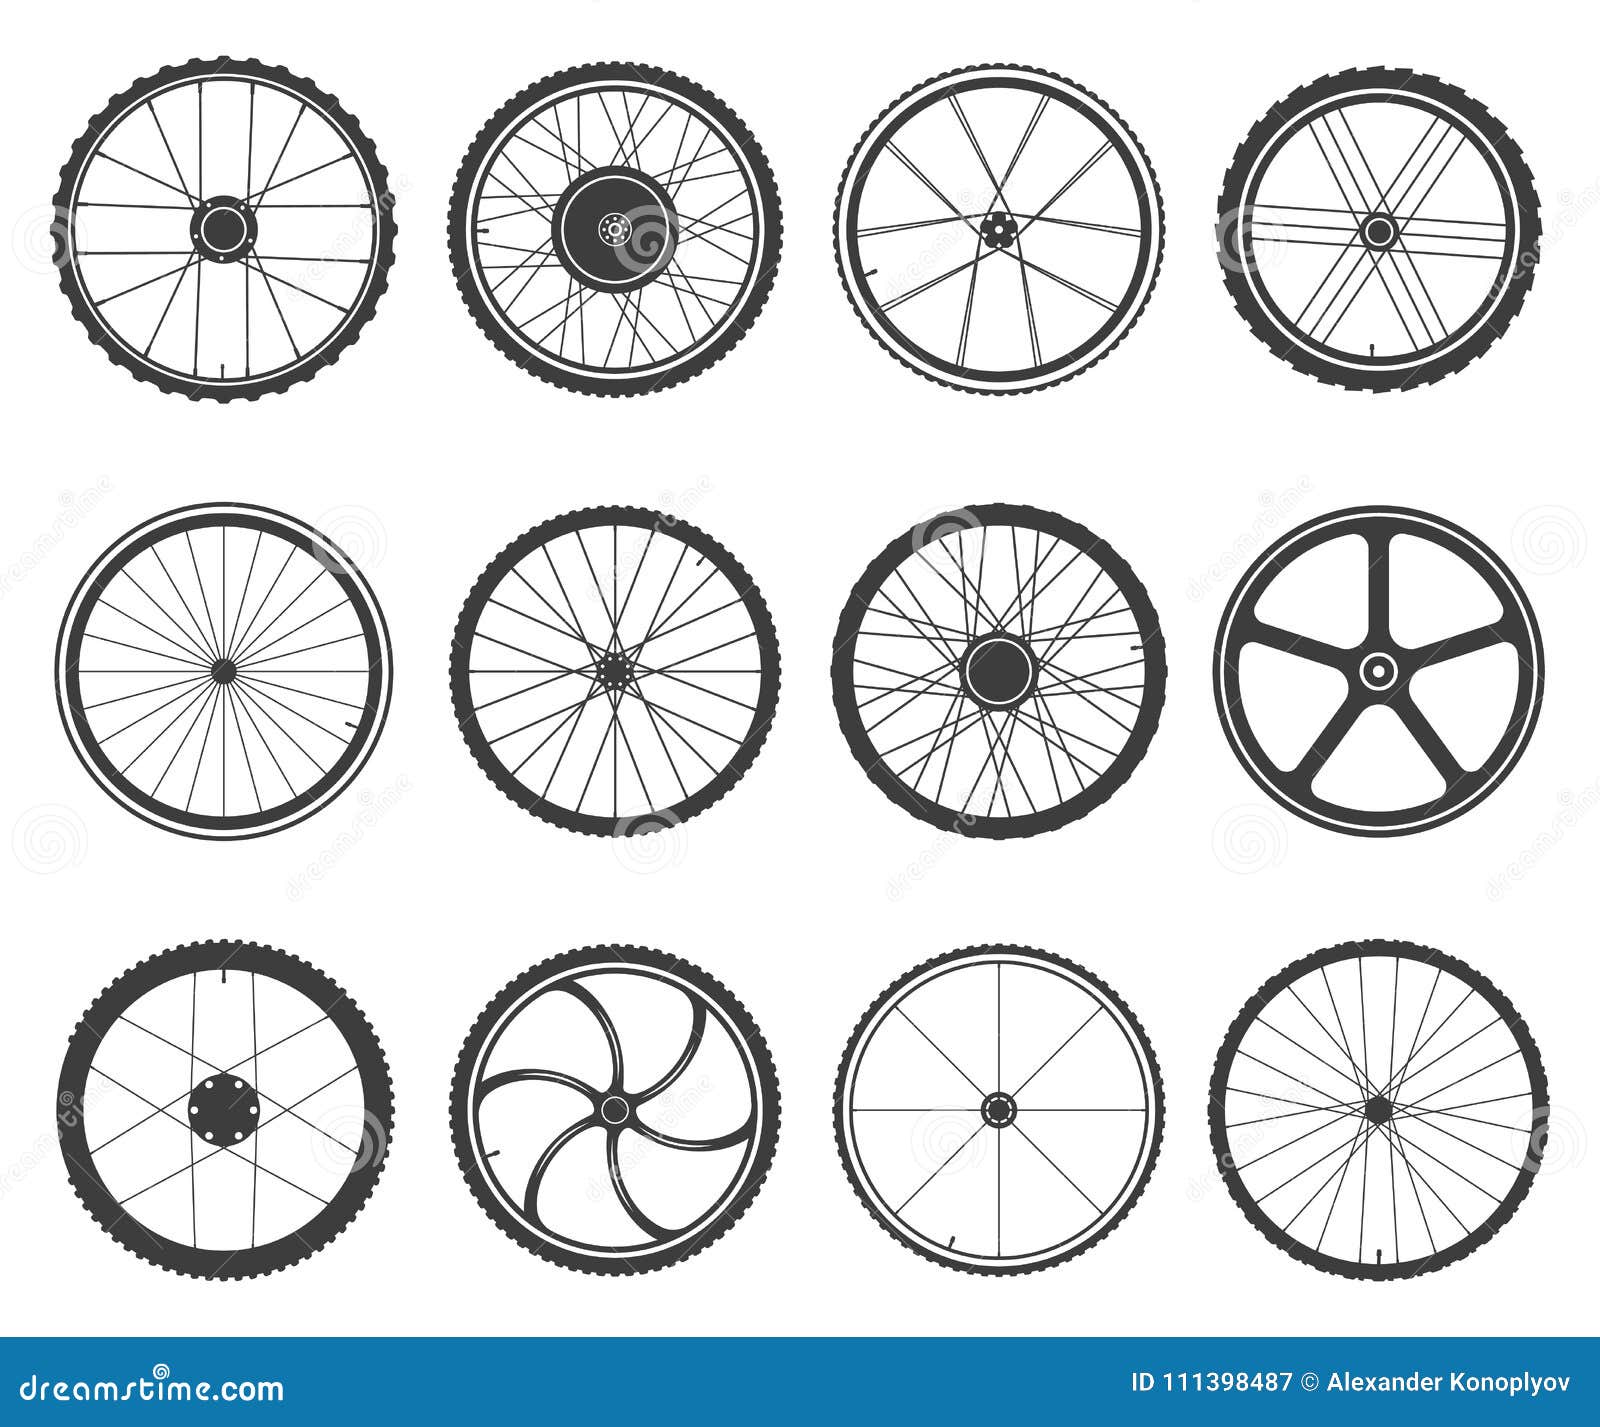 Колесо велосипед рисунок. Колесо велосипеда нарисованное. Велосипедное колесо вектор. Велосипедное колесо для рисования. Колесо Векторная Графика.